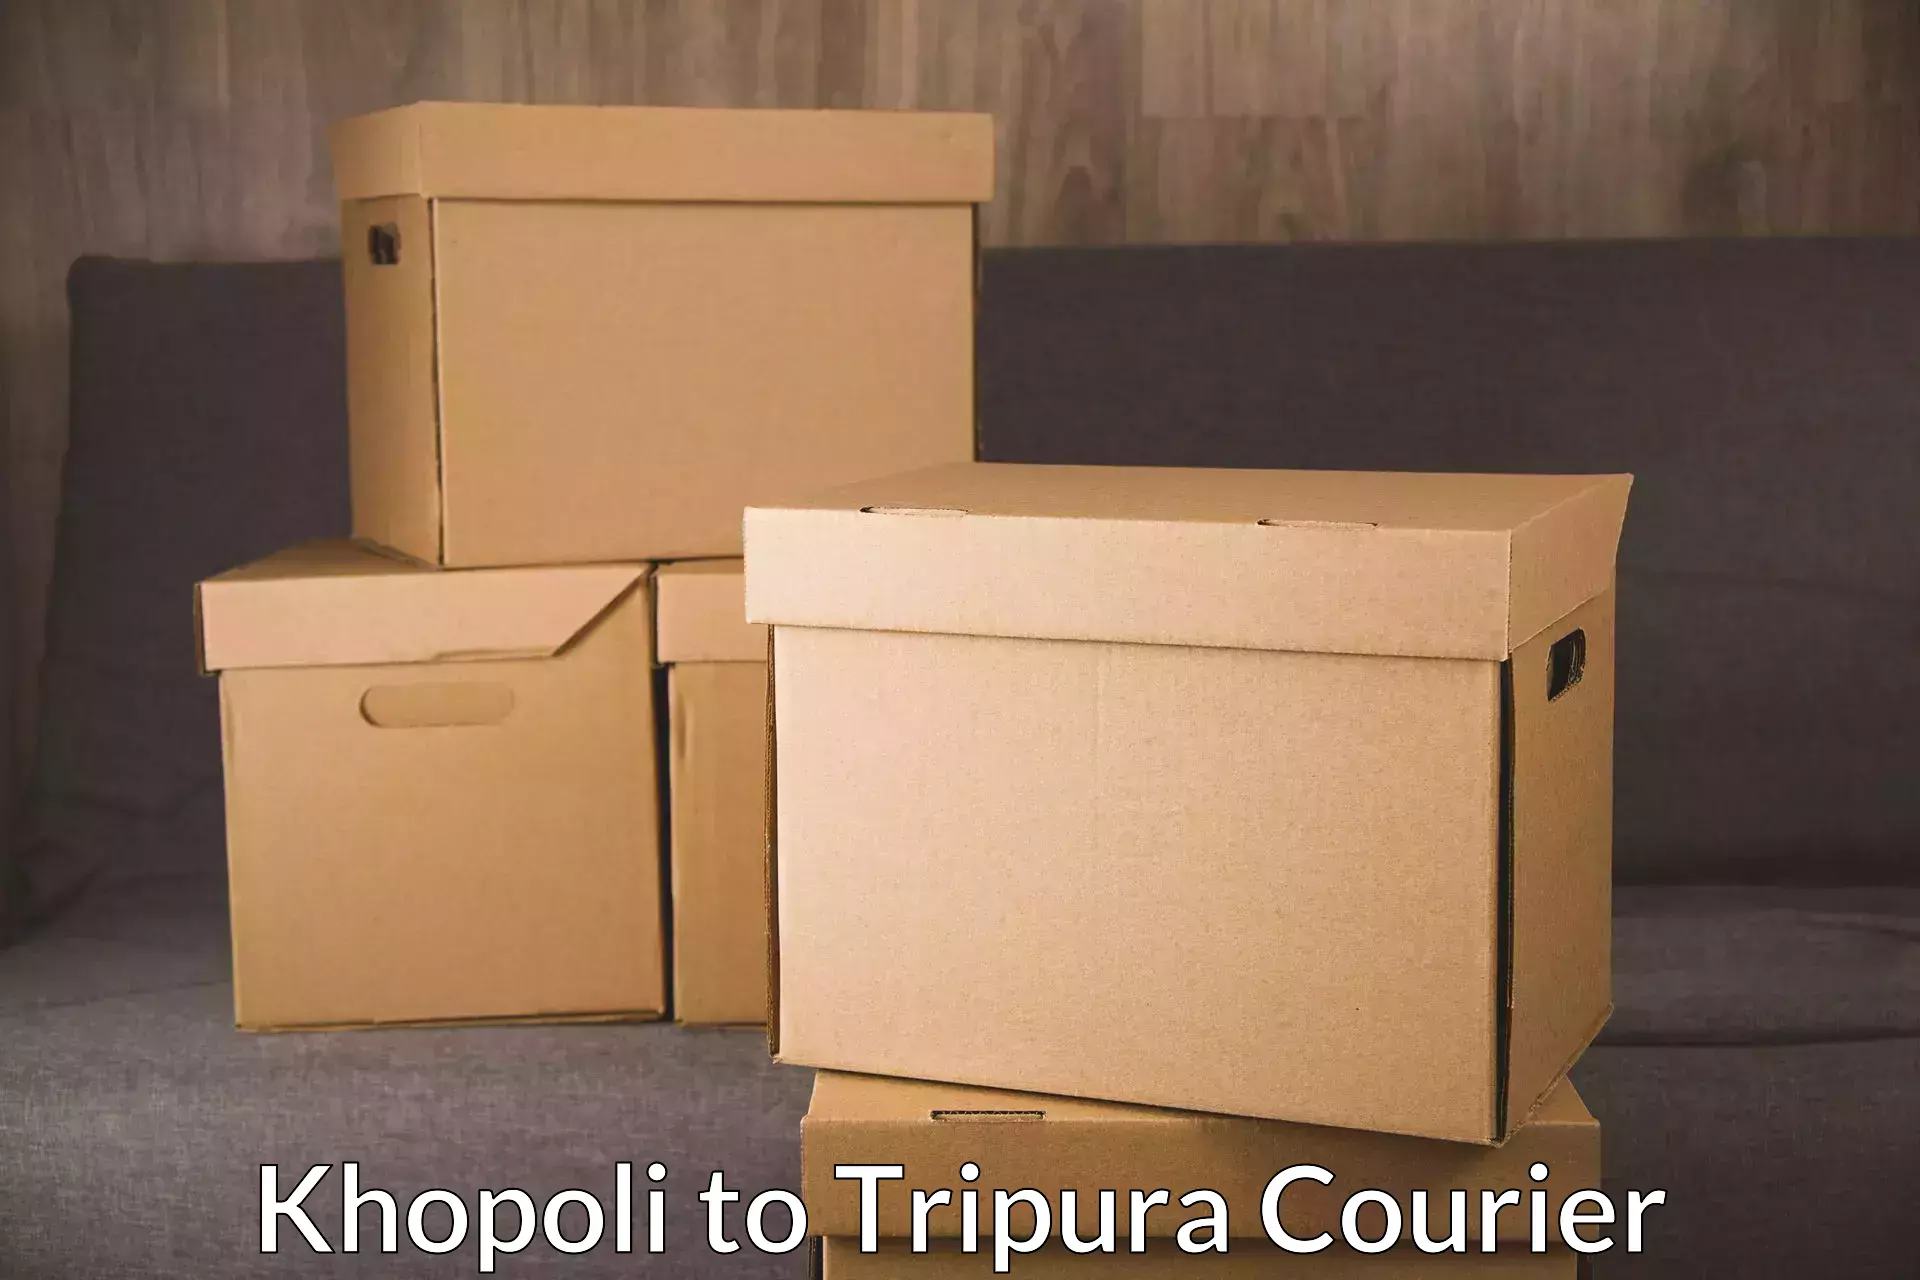 Express delivery network Khopoli to Tripura